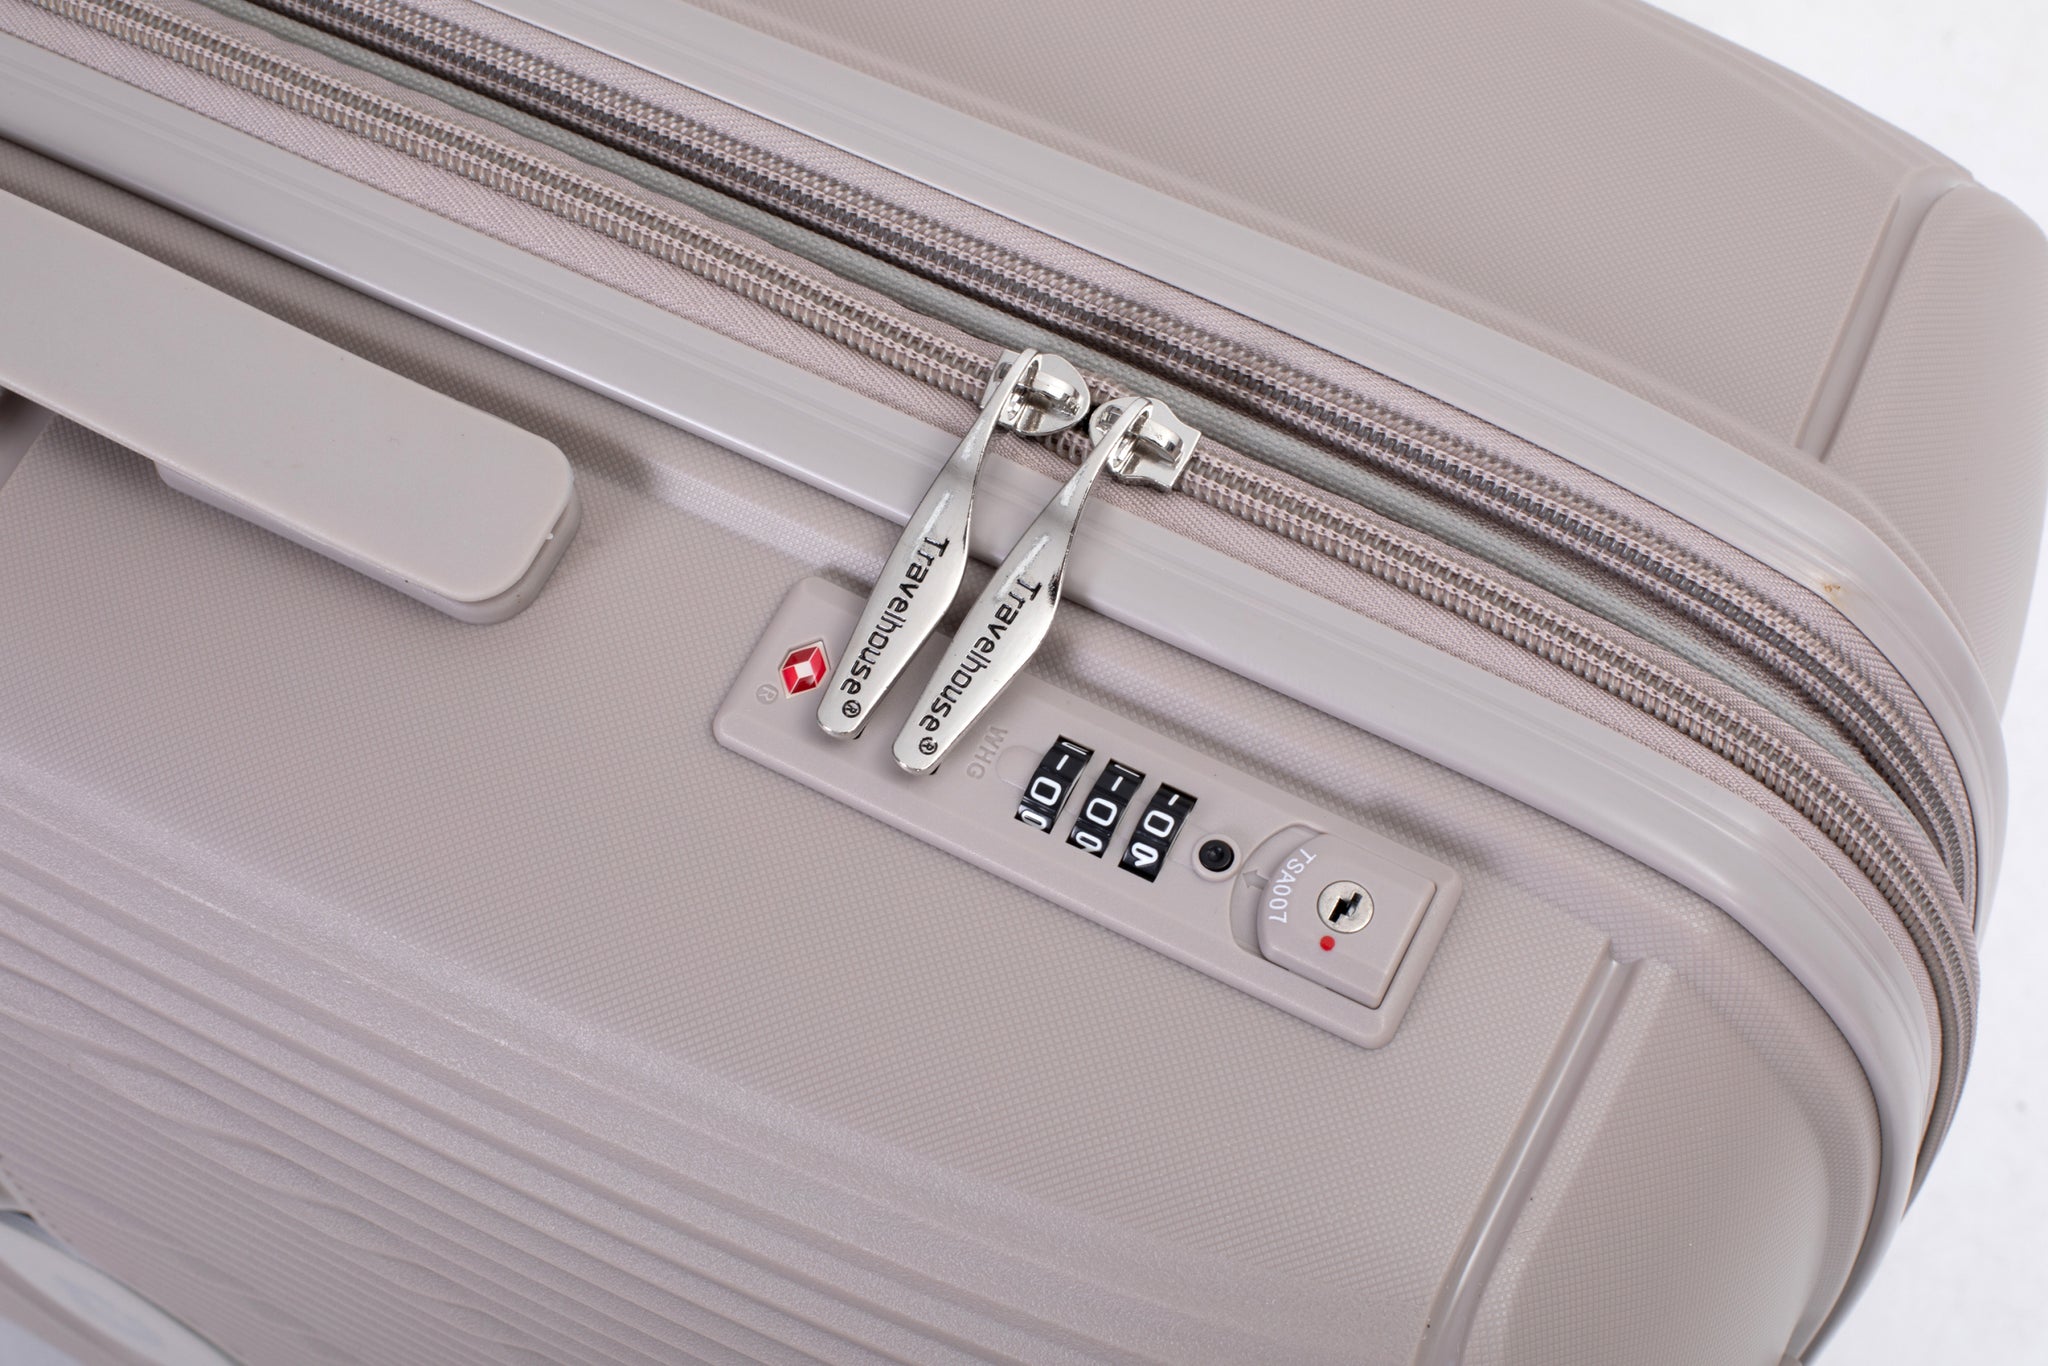 Expandable Hardshell Suitcase Double Spinner Wheels PP greige-polypropylene